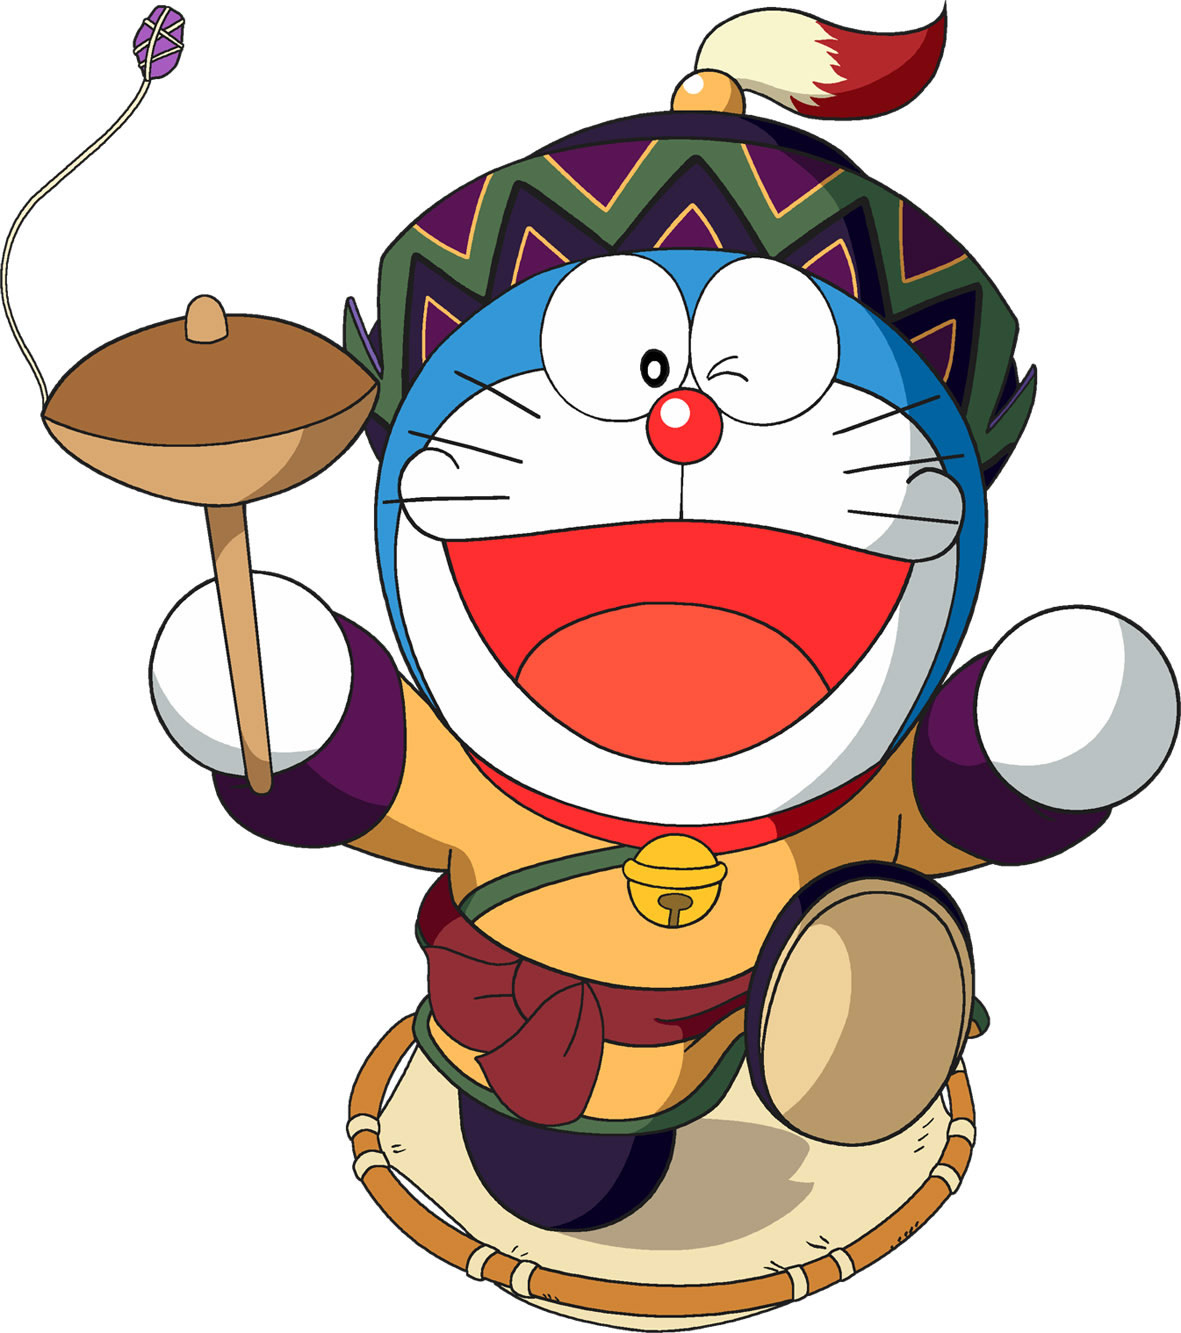 Doraemon-a-cat-robot-anime-character